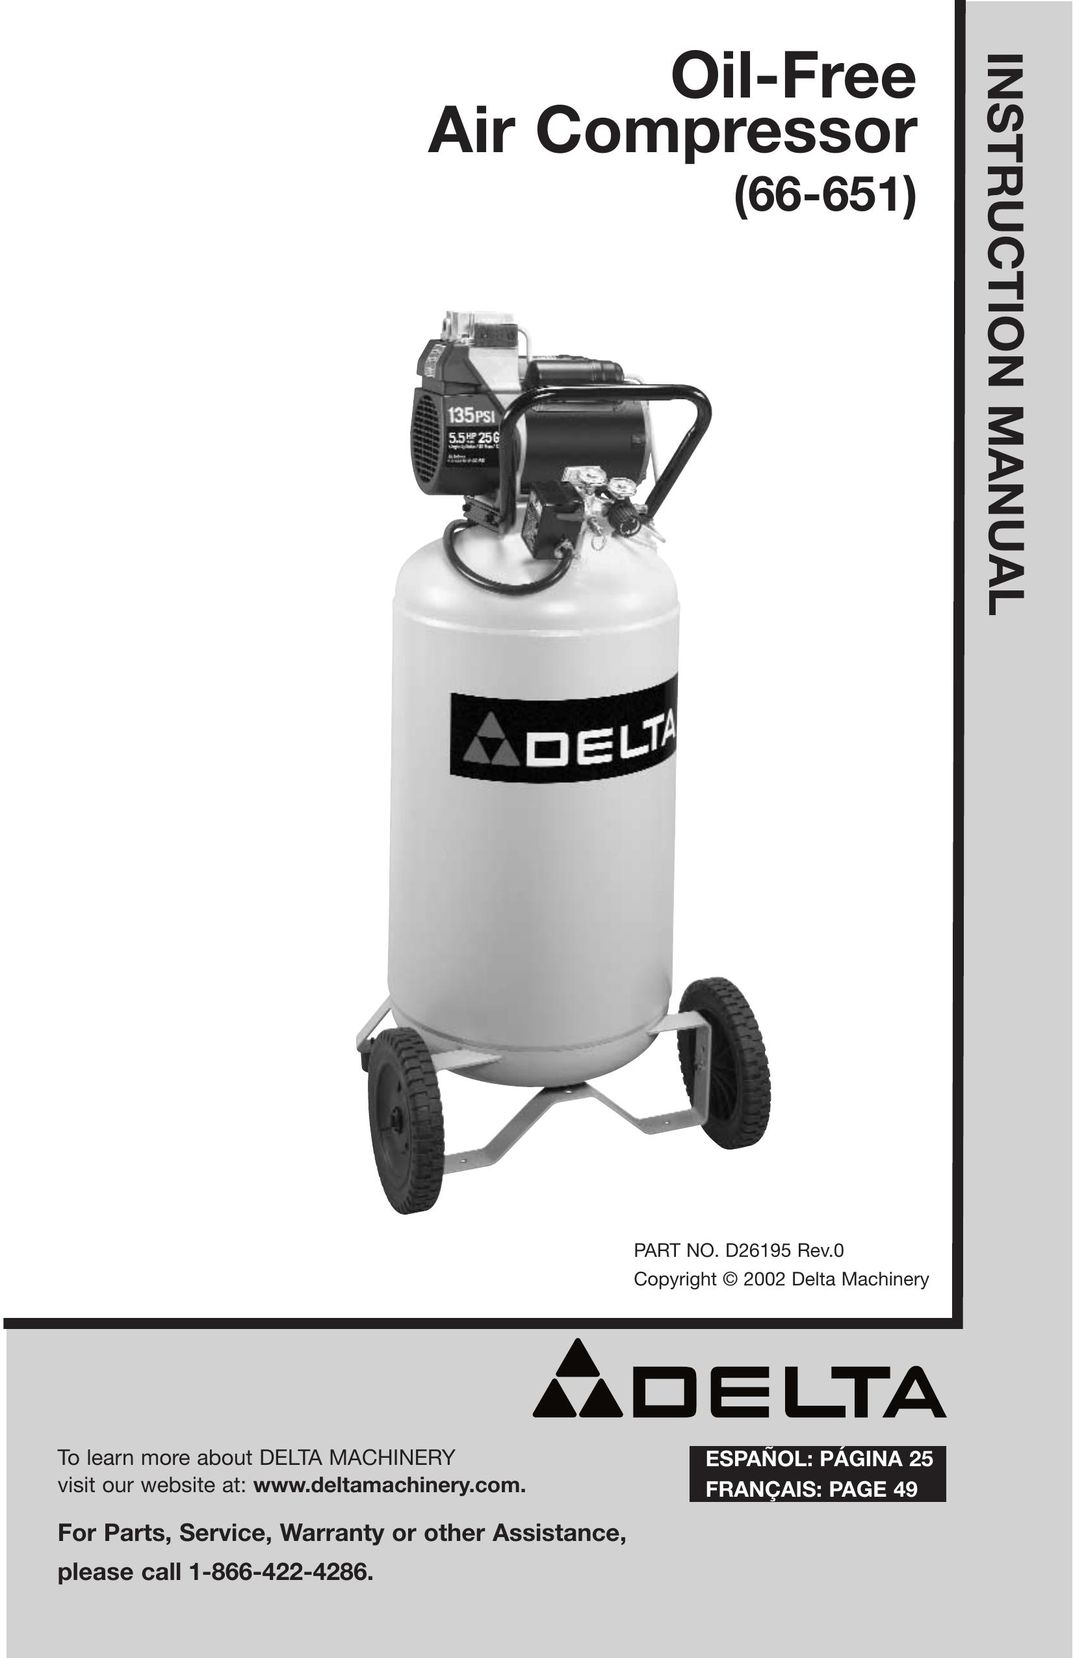 DeWalt 66-651 Air Compressor User Manual